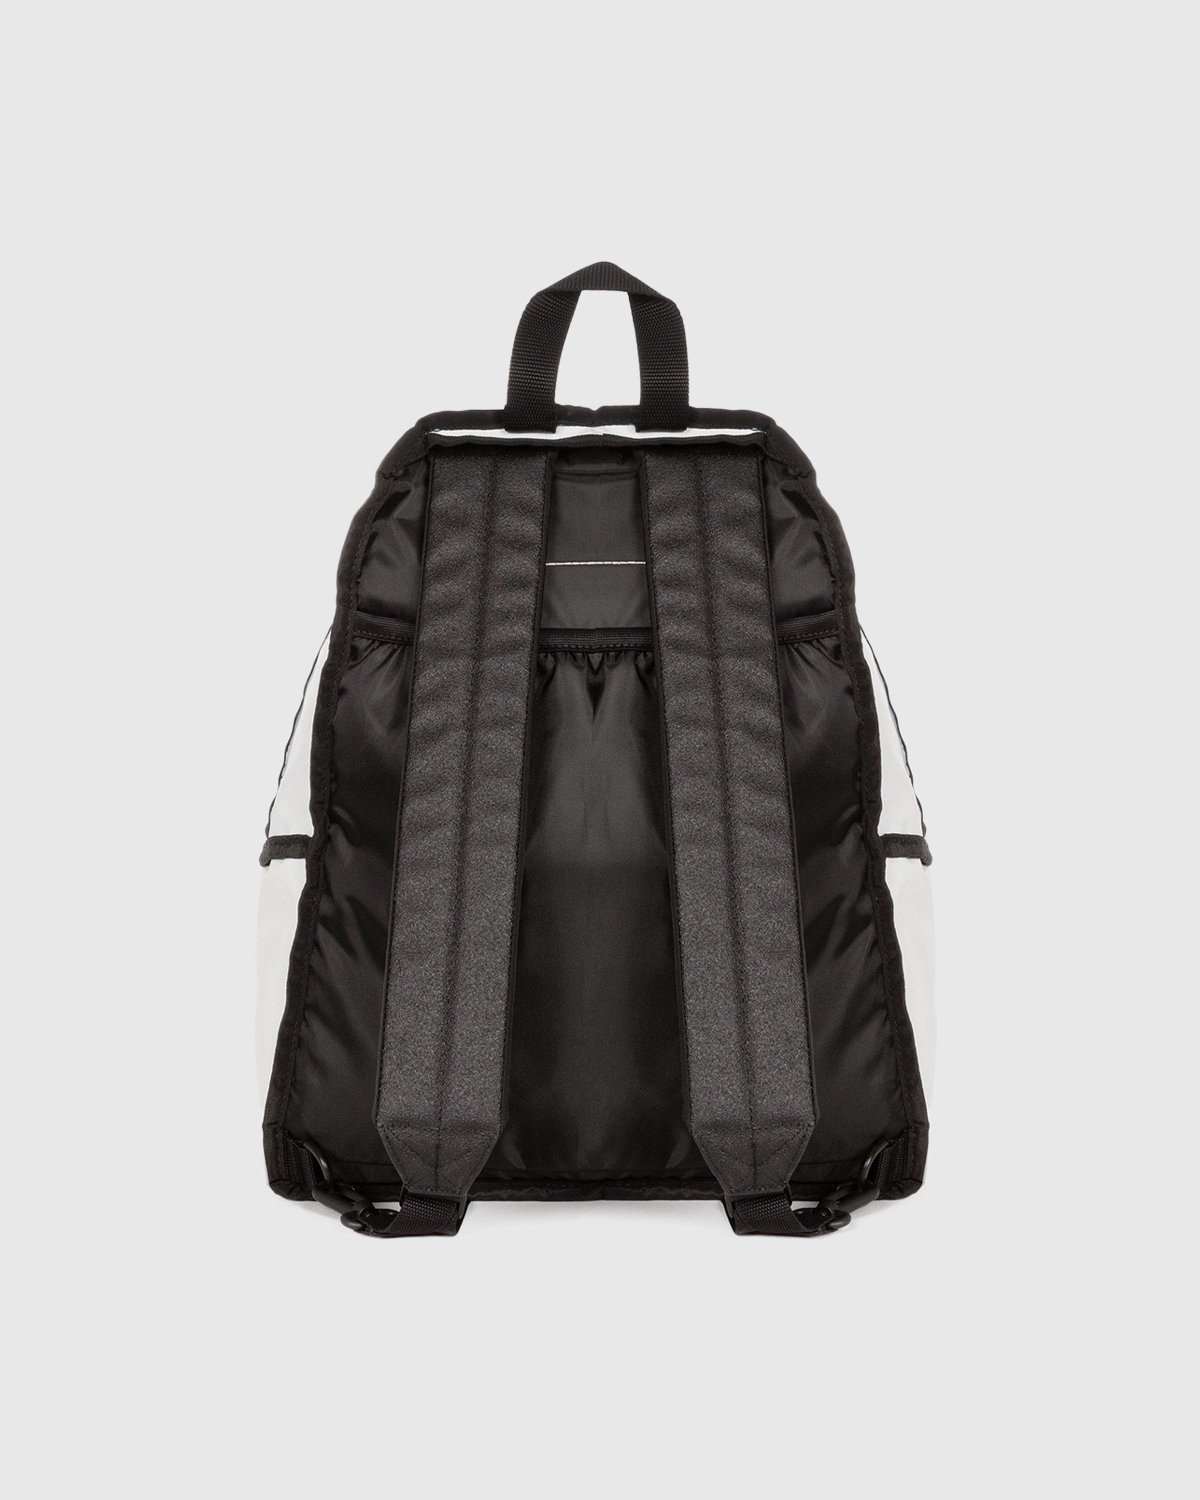 MM6 Maison Margiela x Eastpak - Padded Backpack Black - Accessories - Black - Image 2